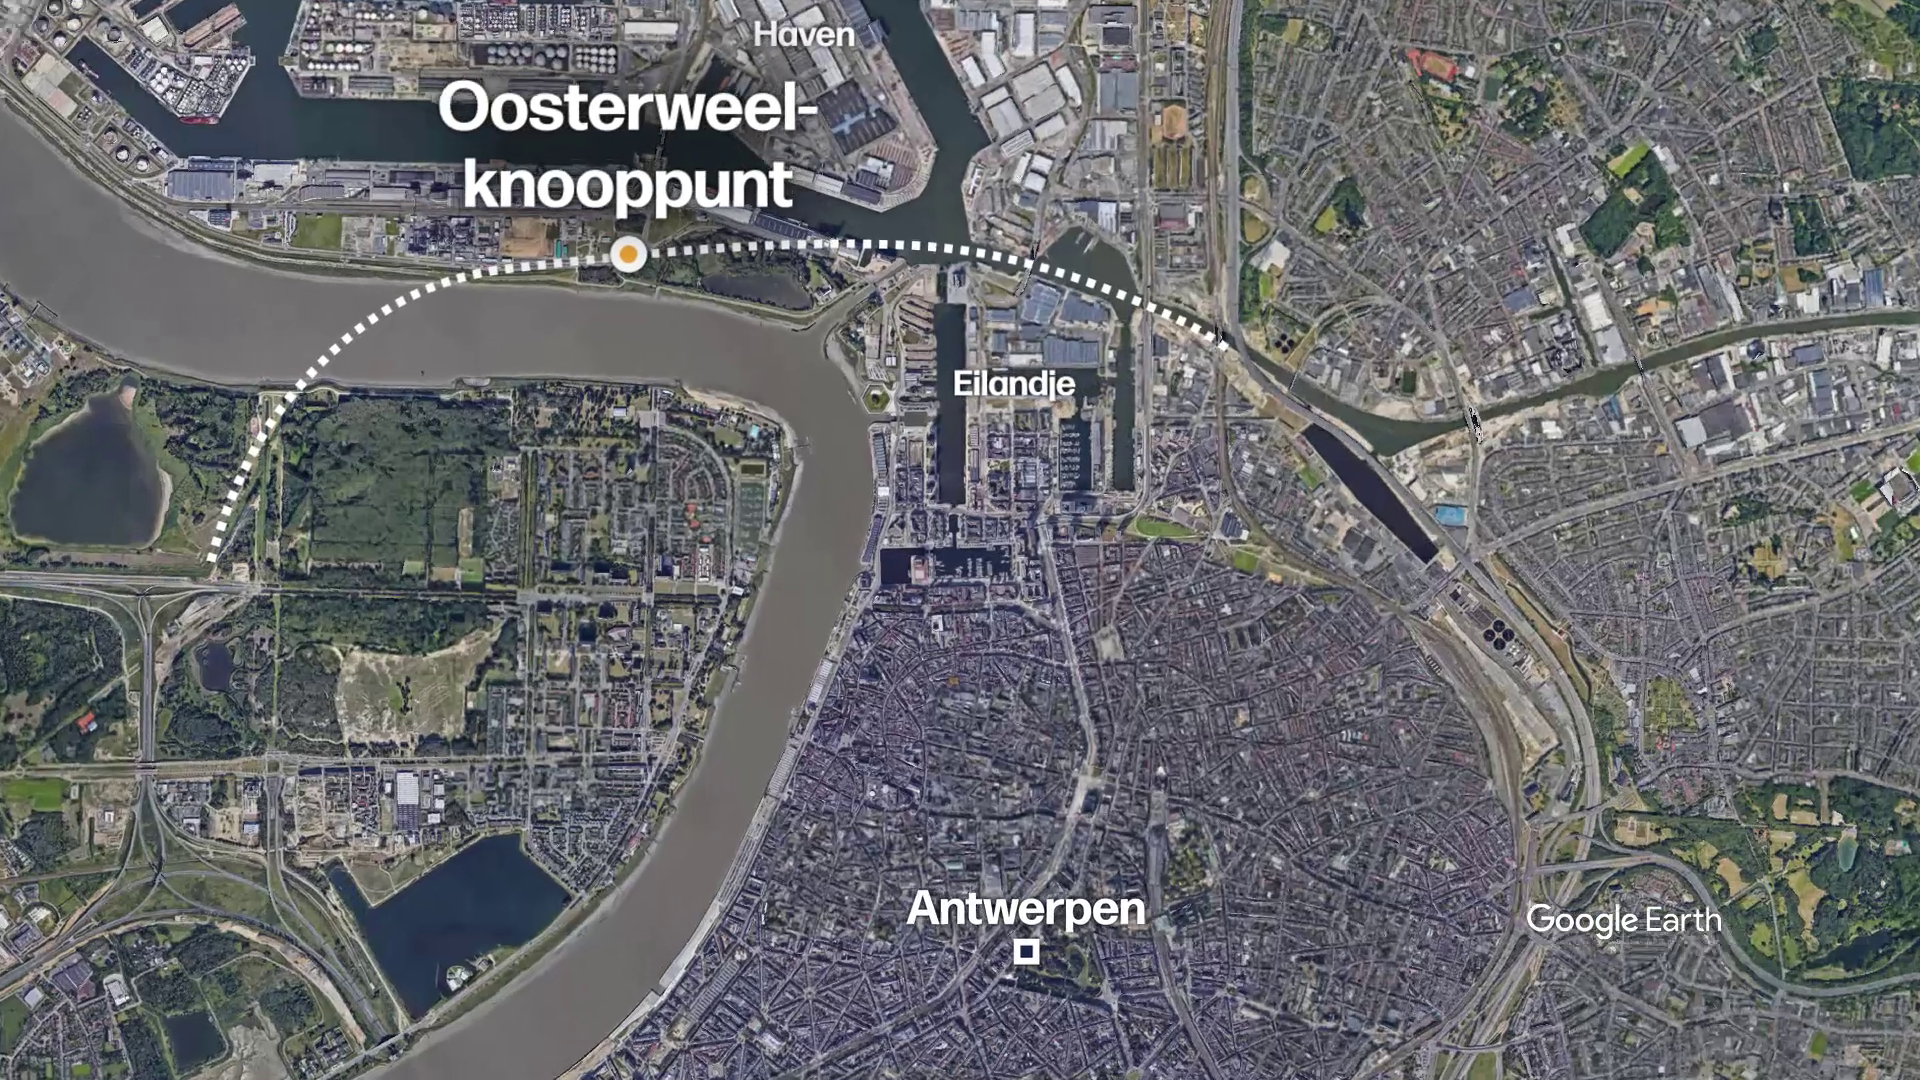 Menagerry veteraan smal Oosterweelwerken op kruissnelheid: opritten Antwerpse ring in Merksem  dicht, je moet er 10 jaar lang omrijden | VRT NWS: nieuws